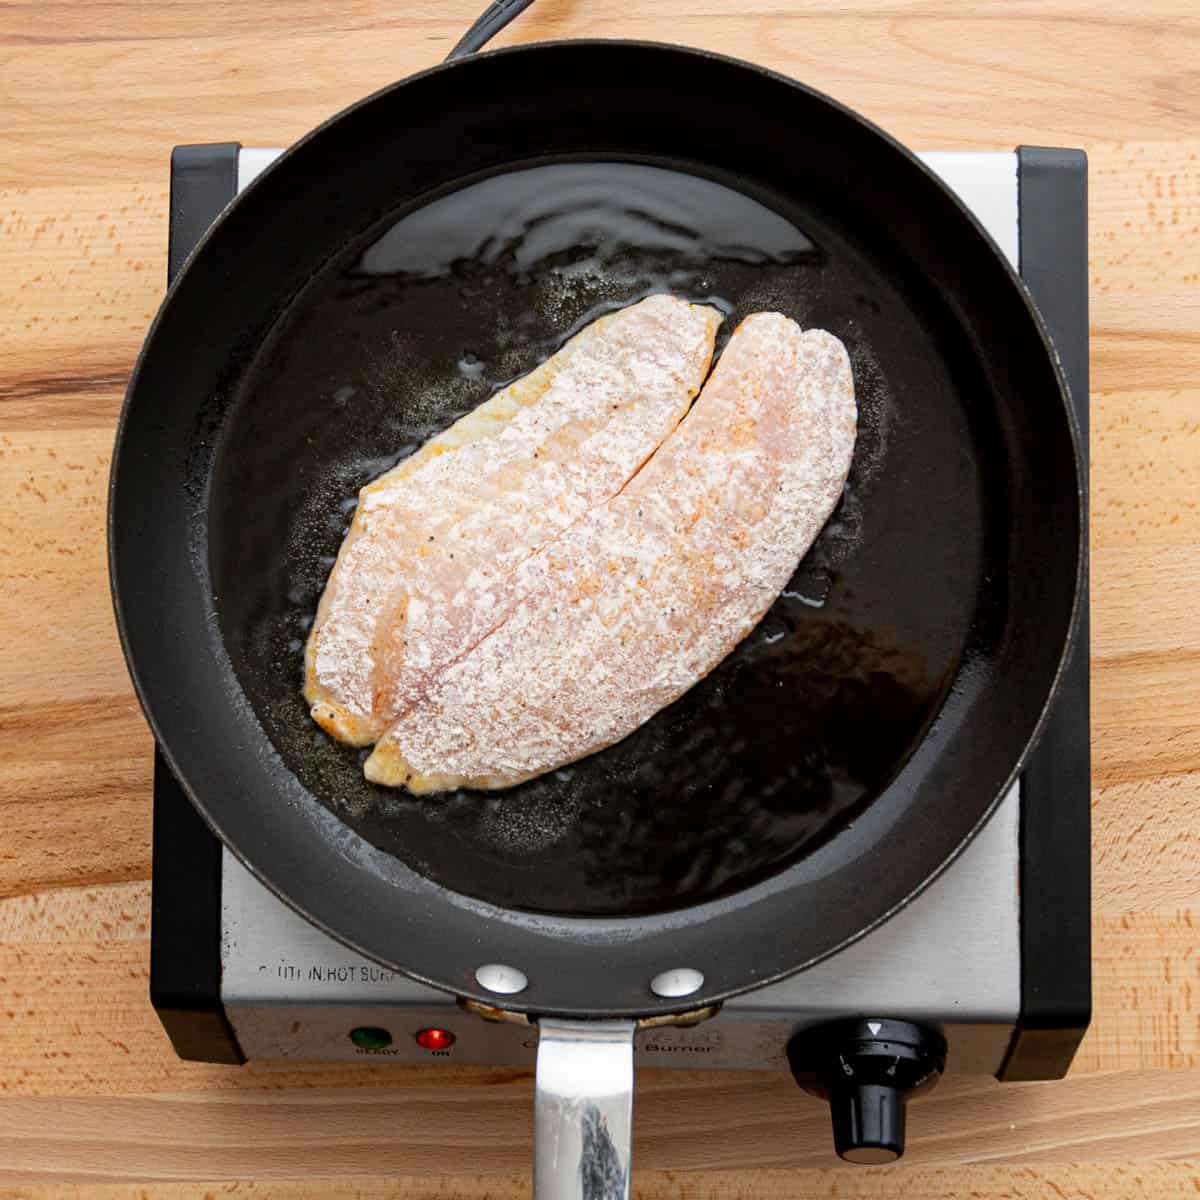  cook the fish fillets for 1.5 - 2 minutes per side or until golden brown. 